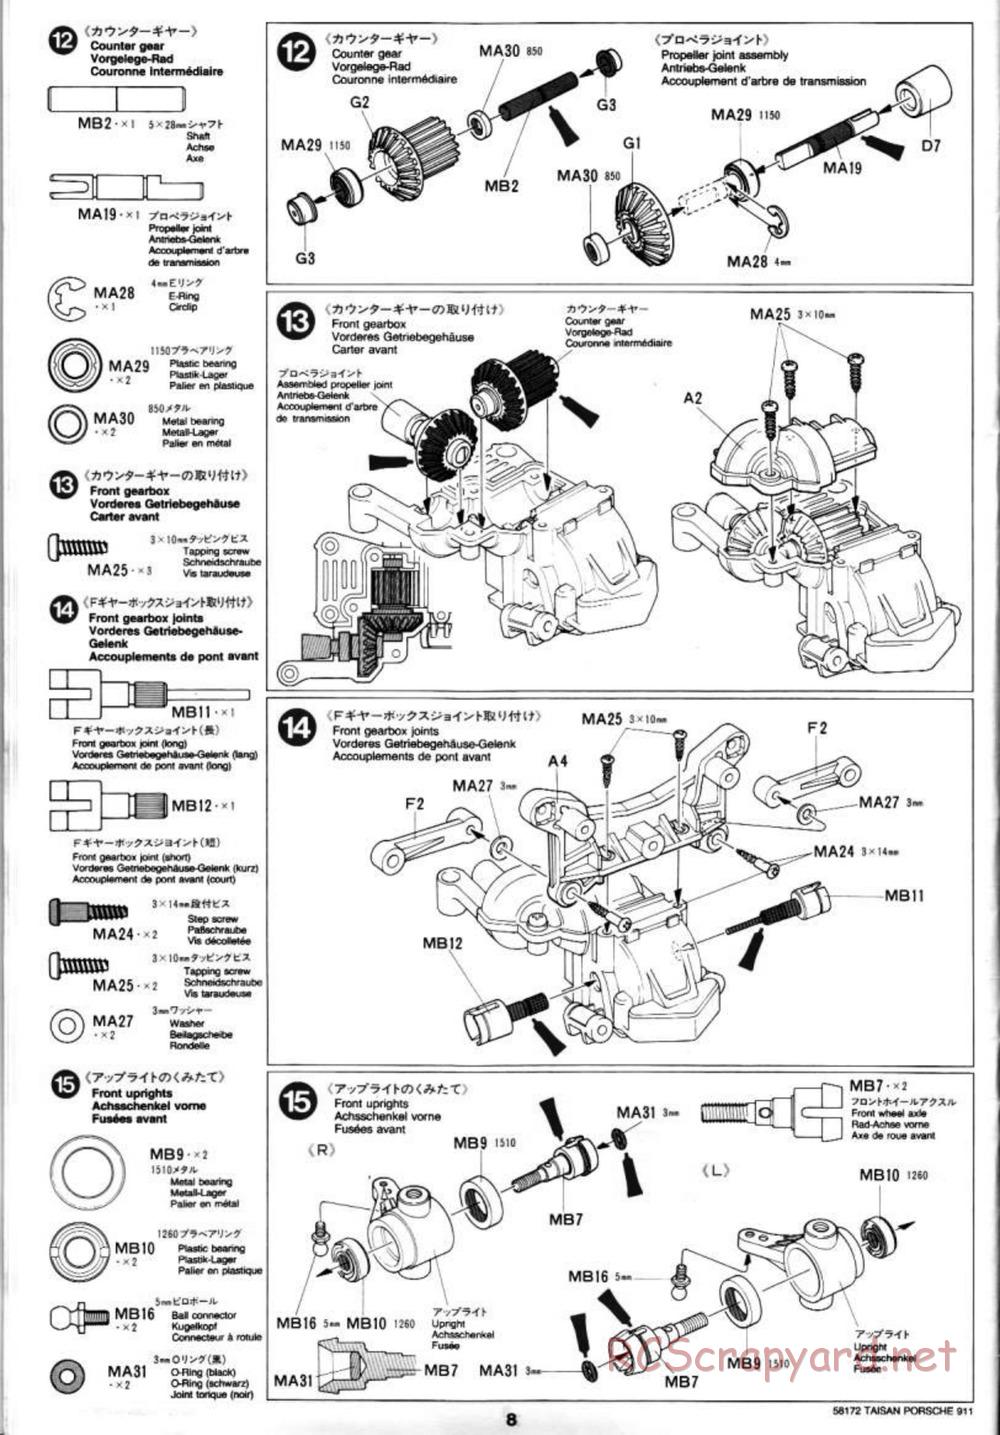 Tamiya - Taisan Starcard Porsche 911 GT2 - TA-02SW Chassis - Manual - Page 8